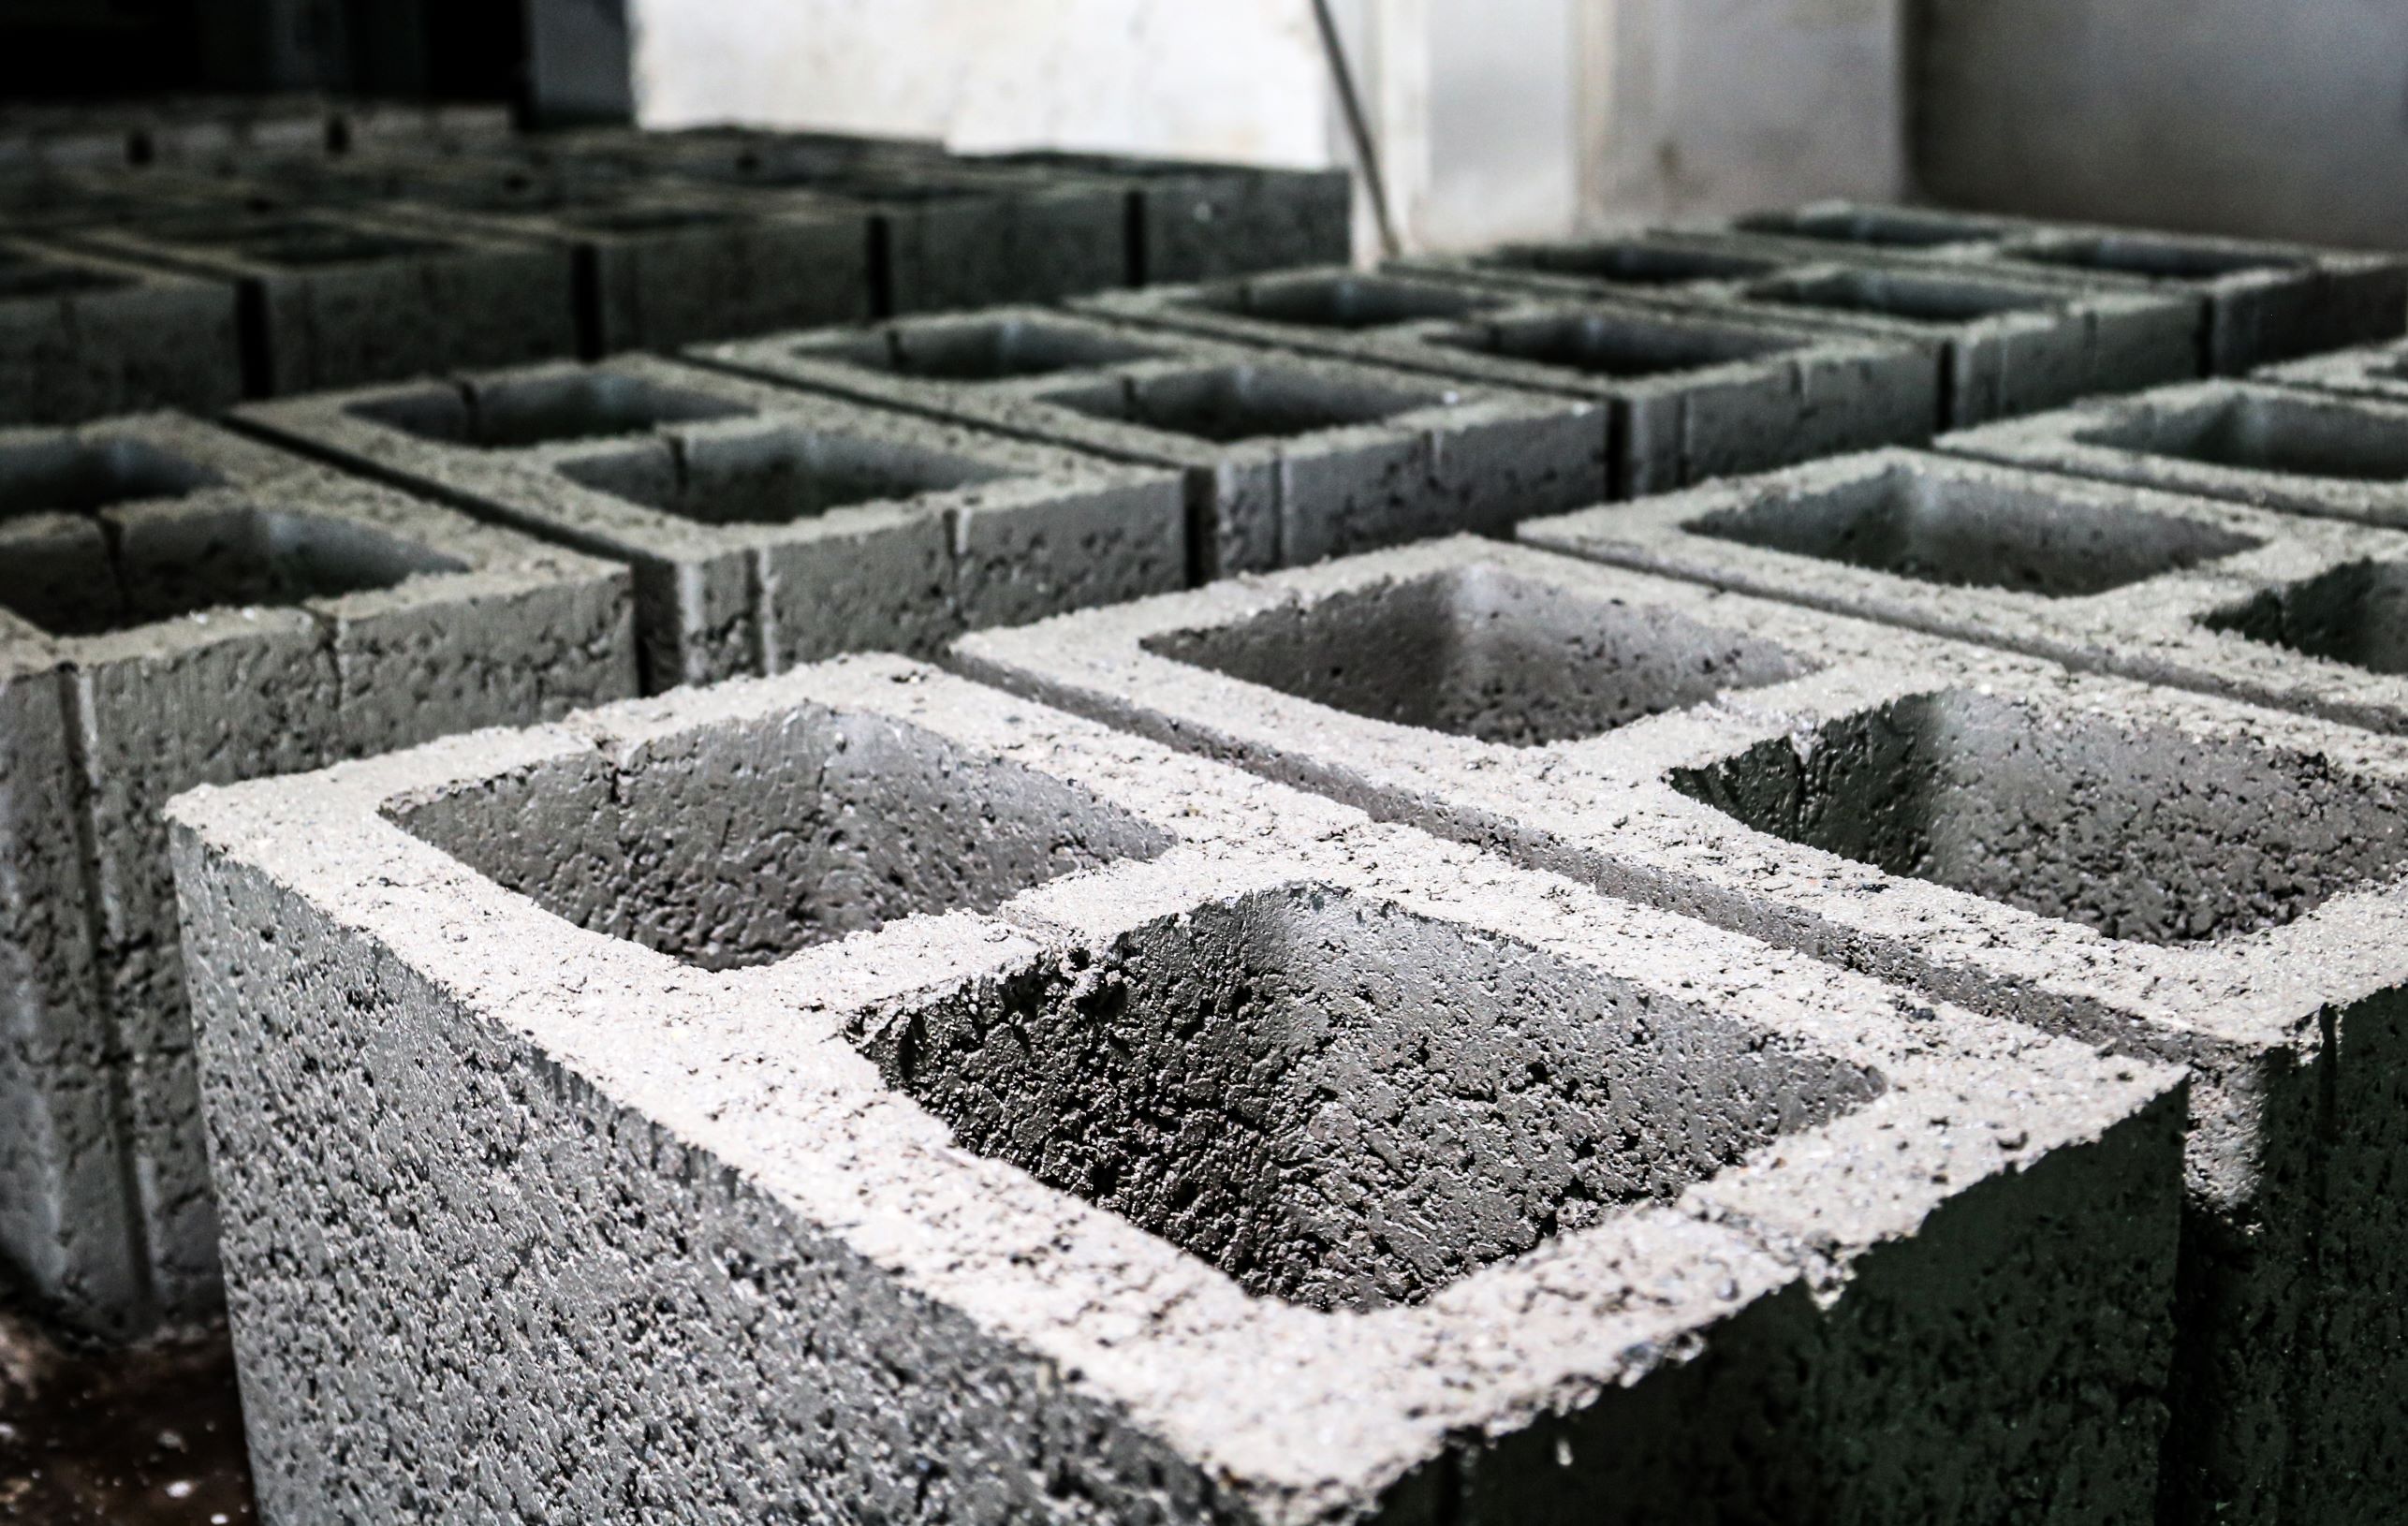 Concrete Blocks